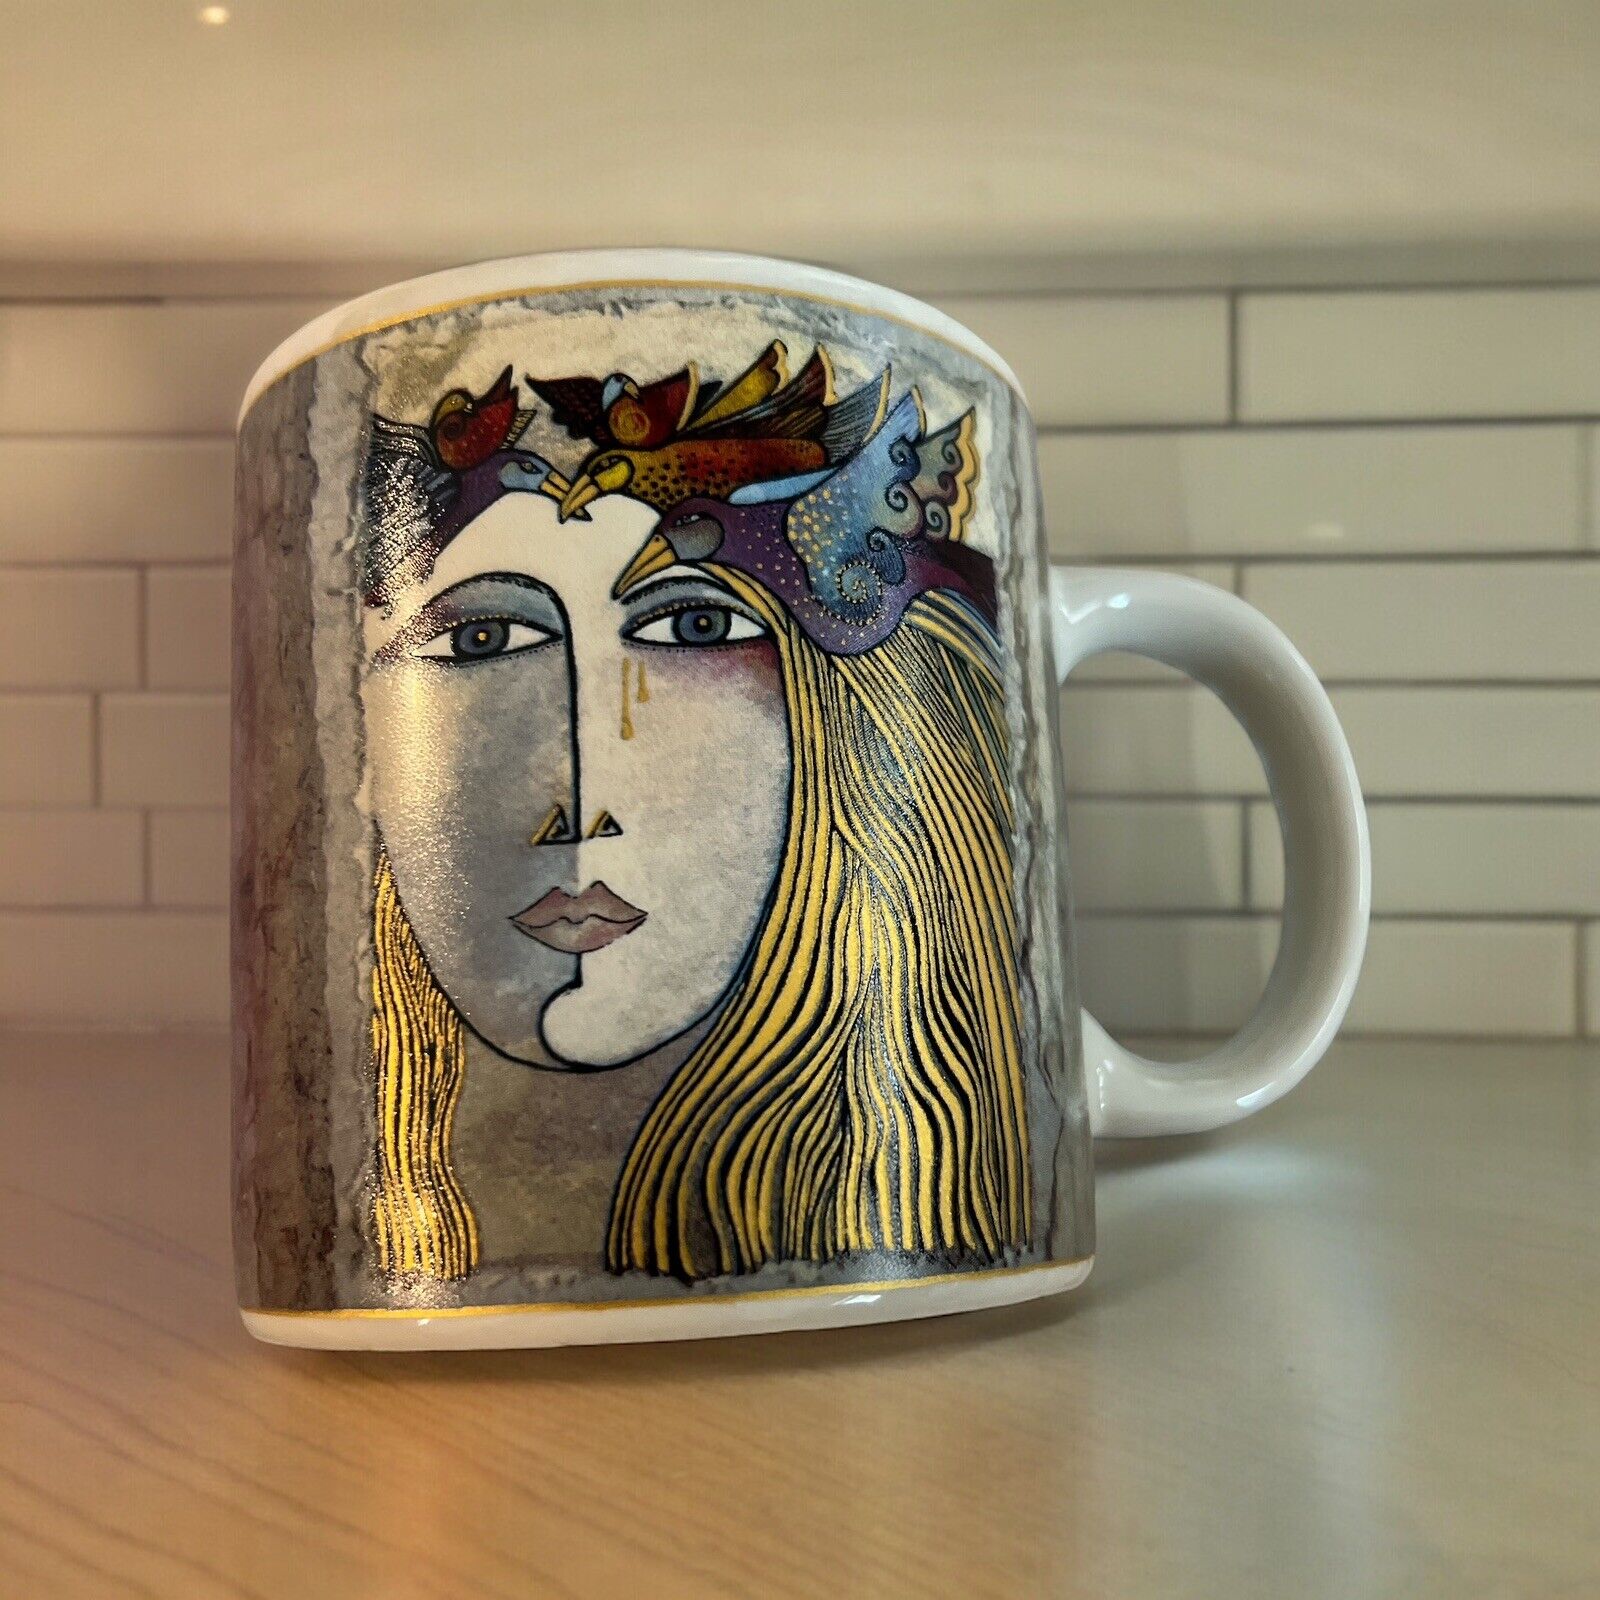 2004 Laurel Burch Wine Things Unlimited Colorful Ceramic Coffee Tea Cup Mug